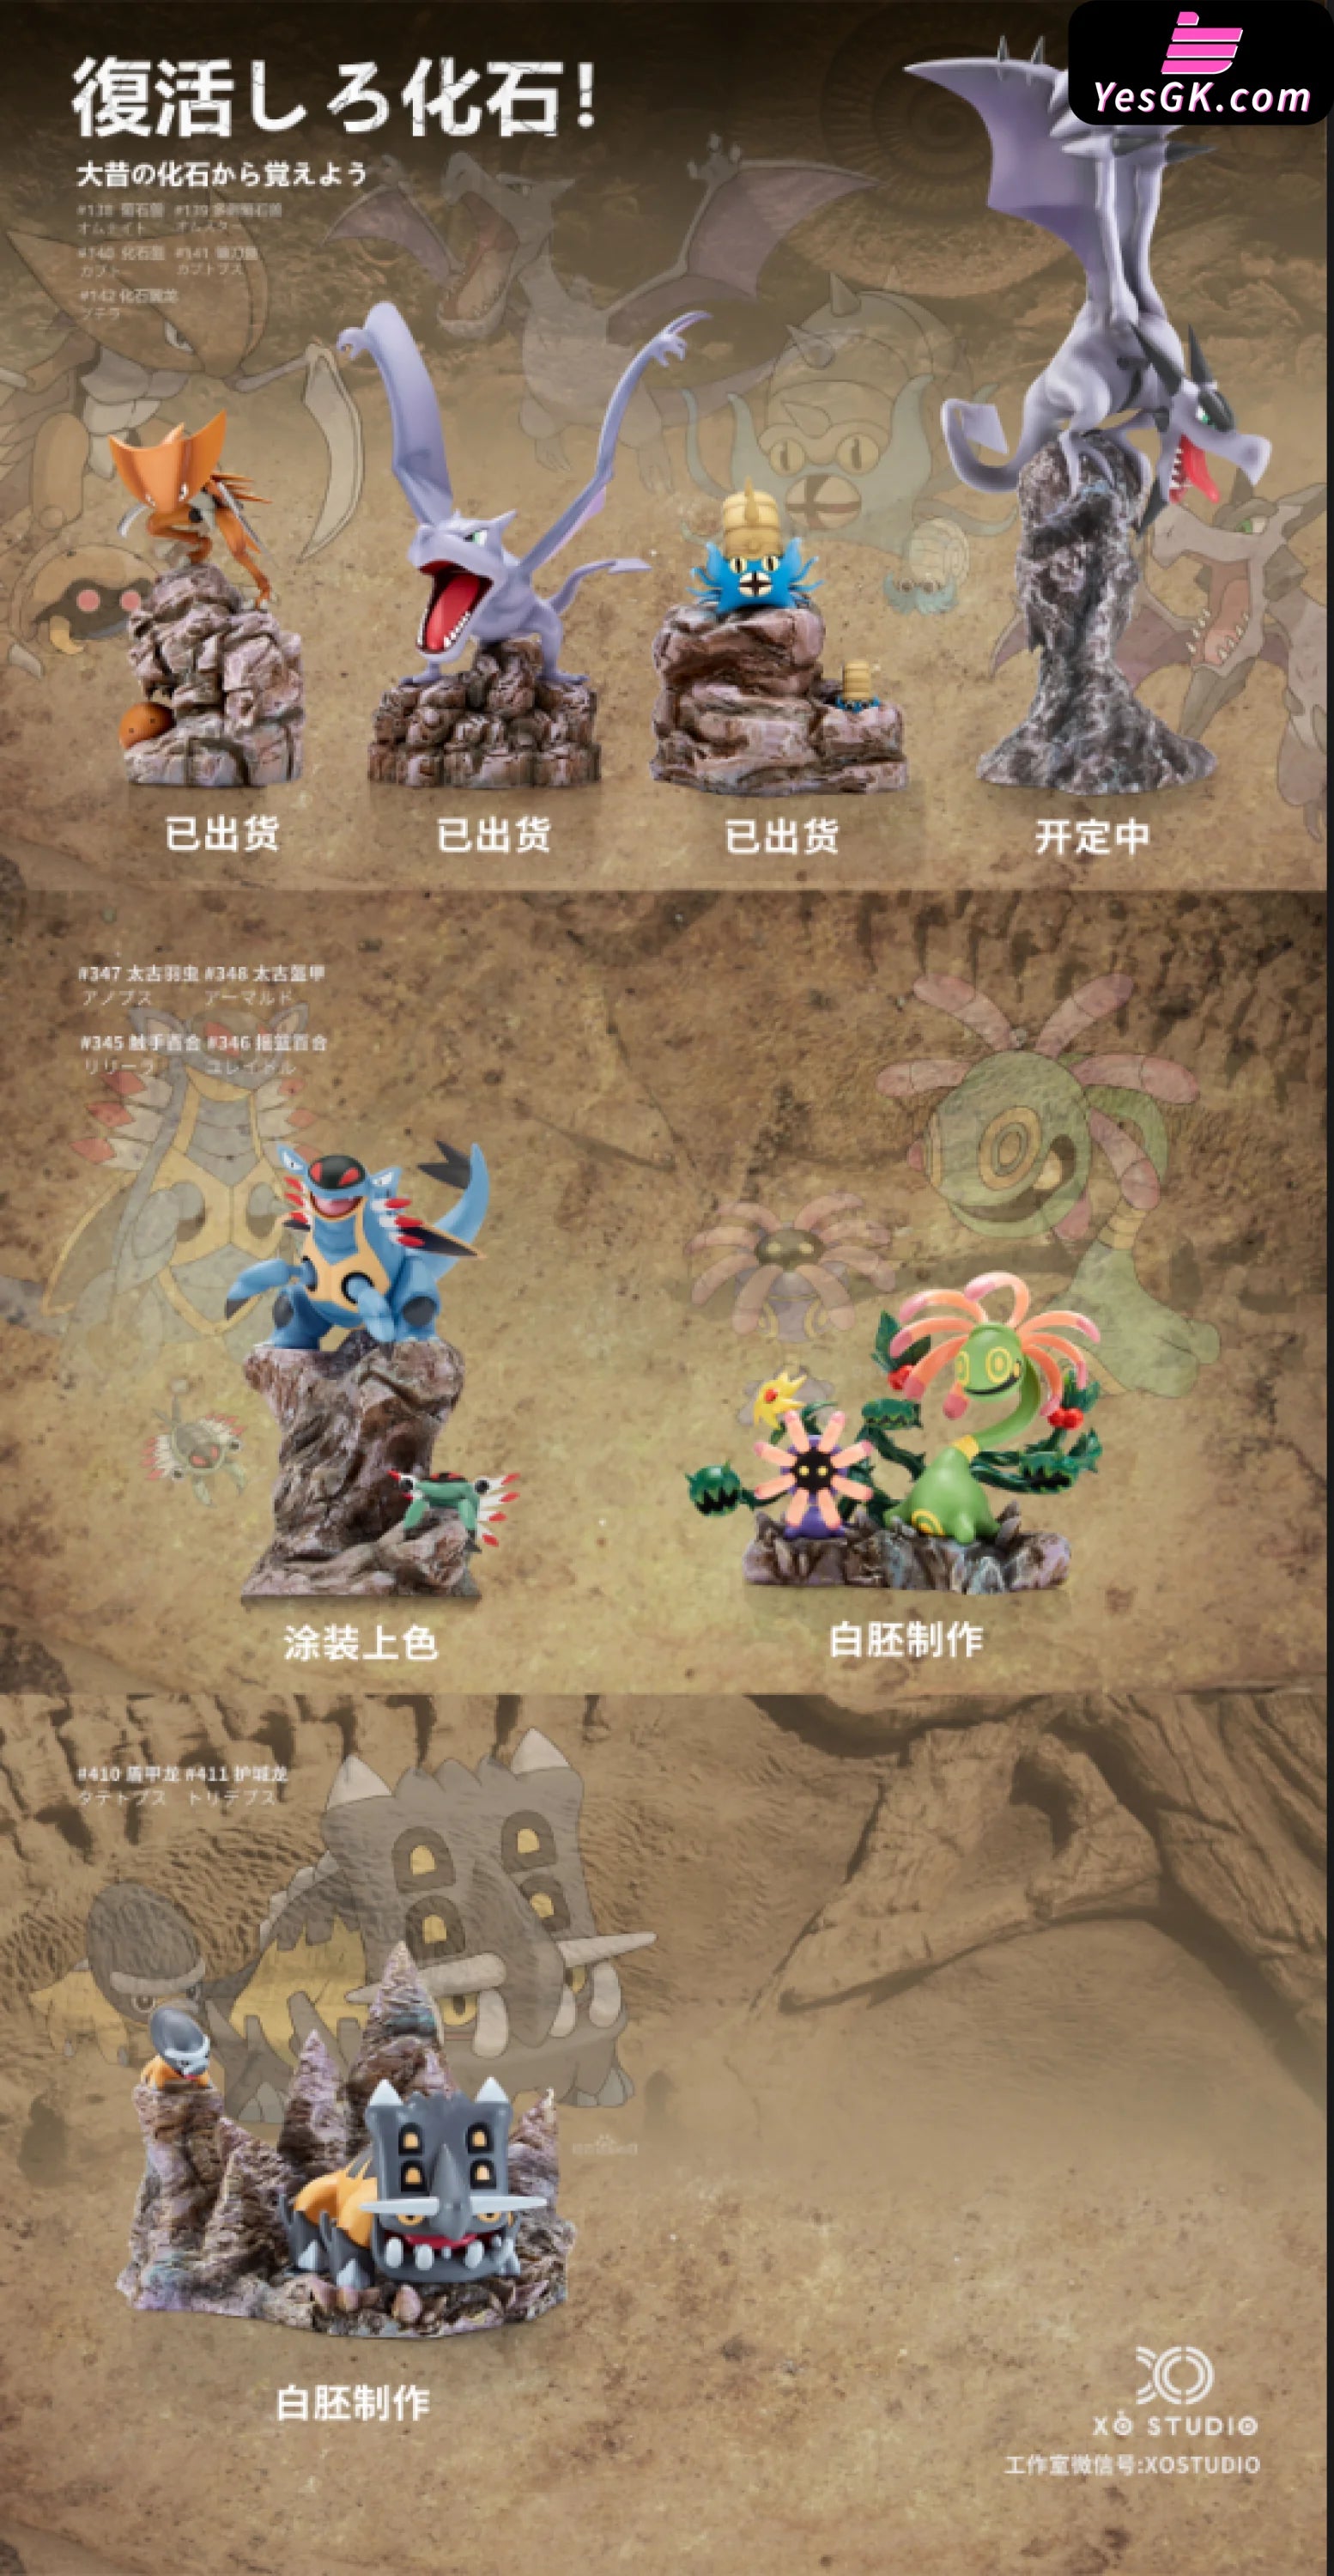 Pokémon 1/20 SCALE WORLD Fossil Revival Series MEGA Aerodactyl